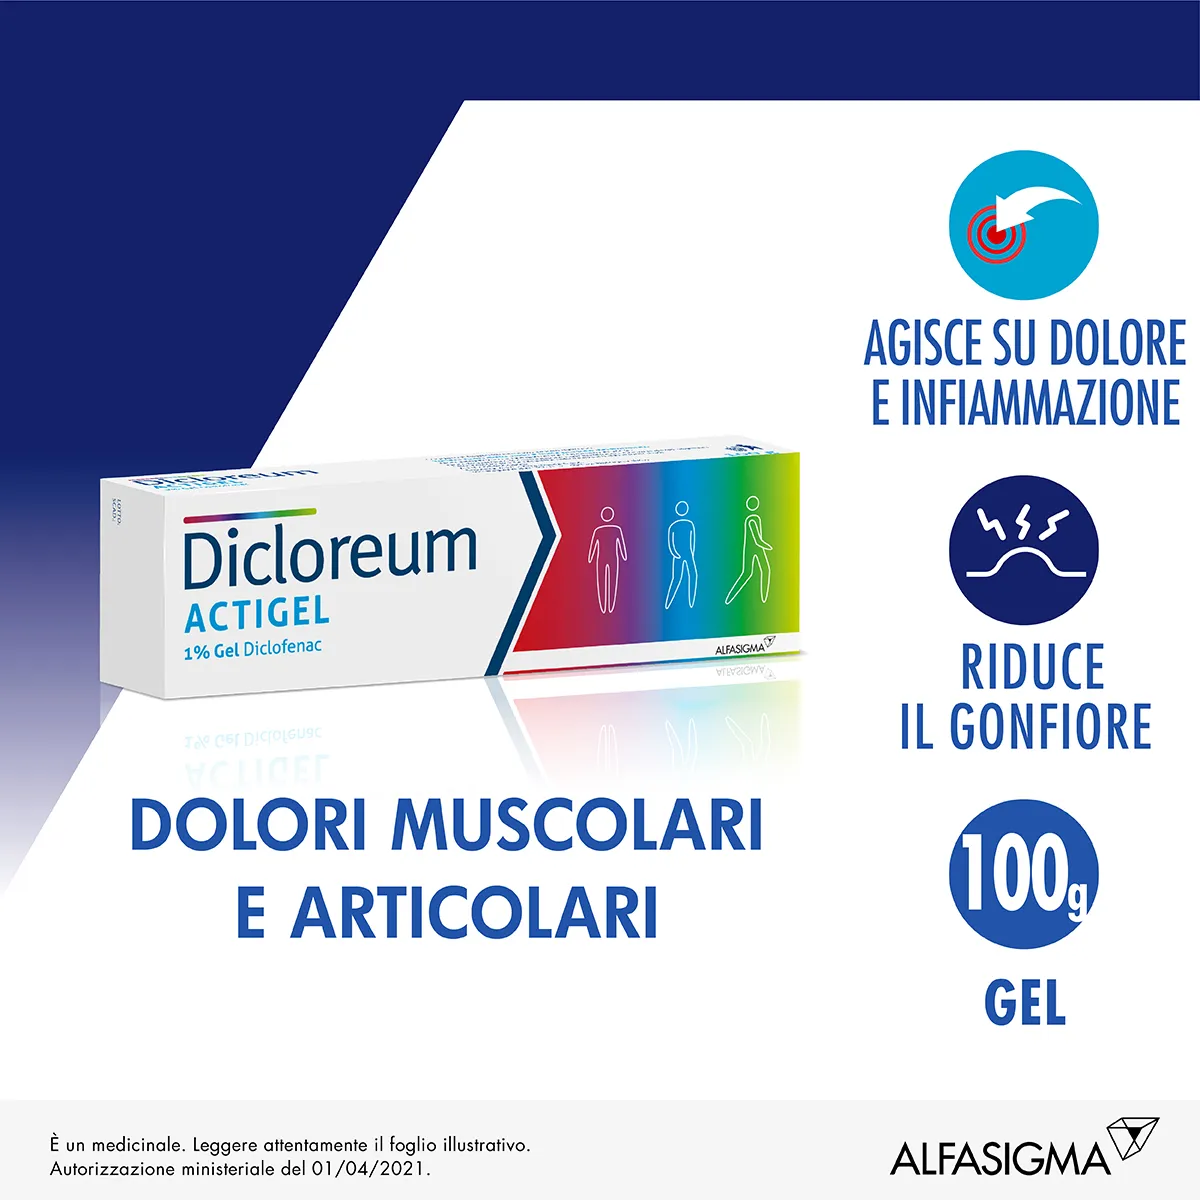 Dicloreum Actigel 1% Diclofenac Gel Dolori Articolari 100 g